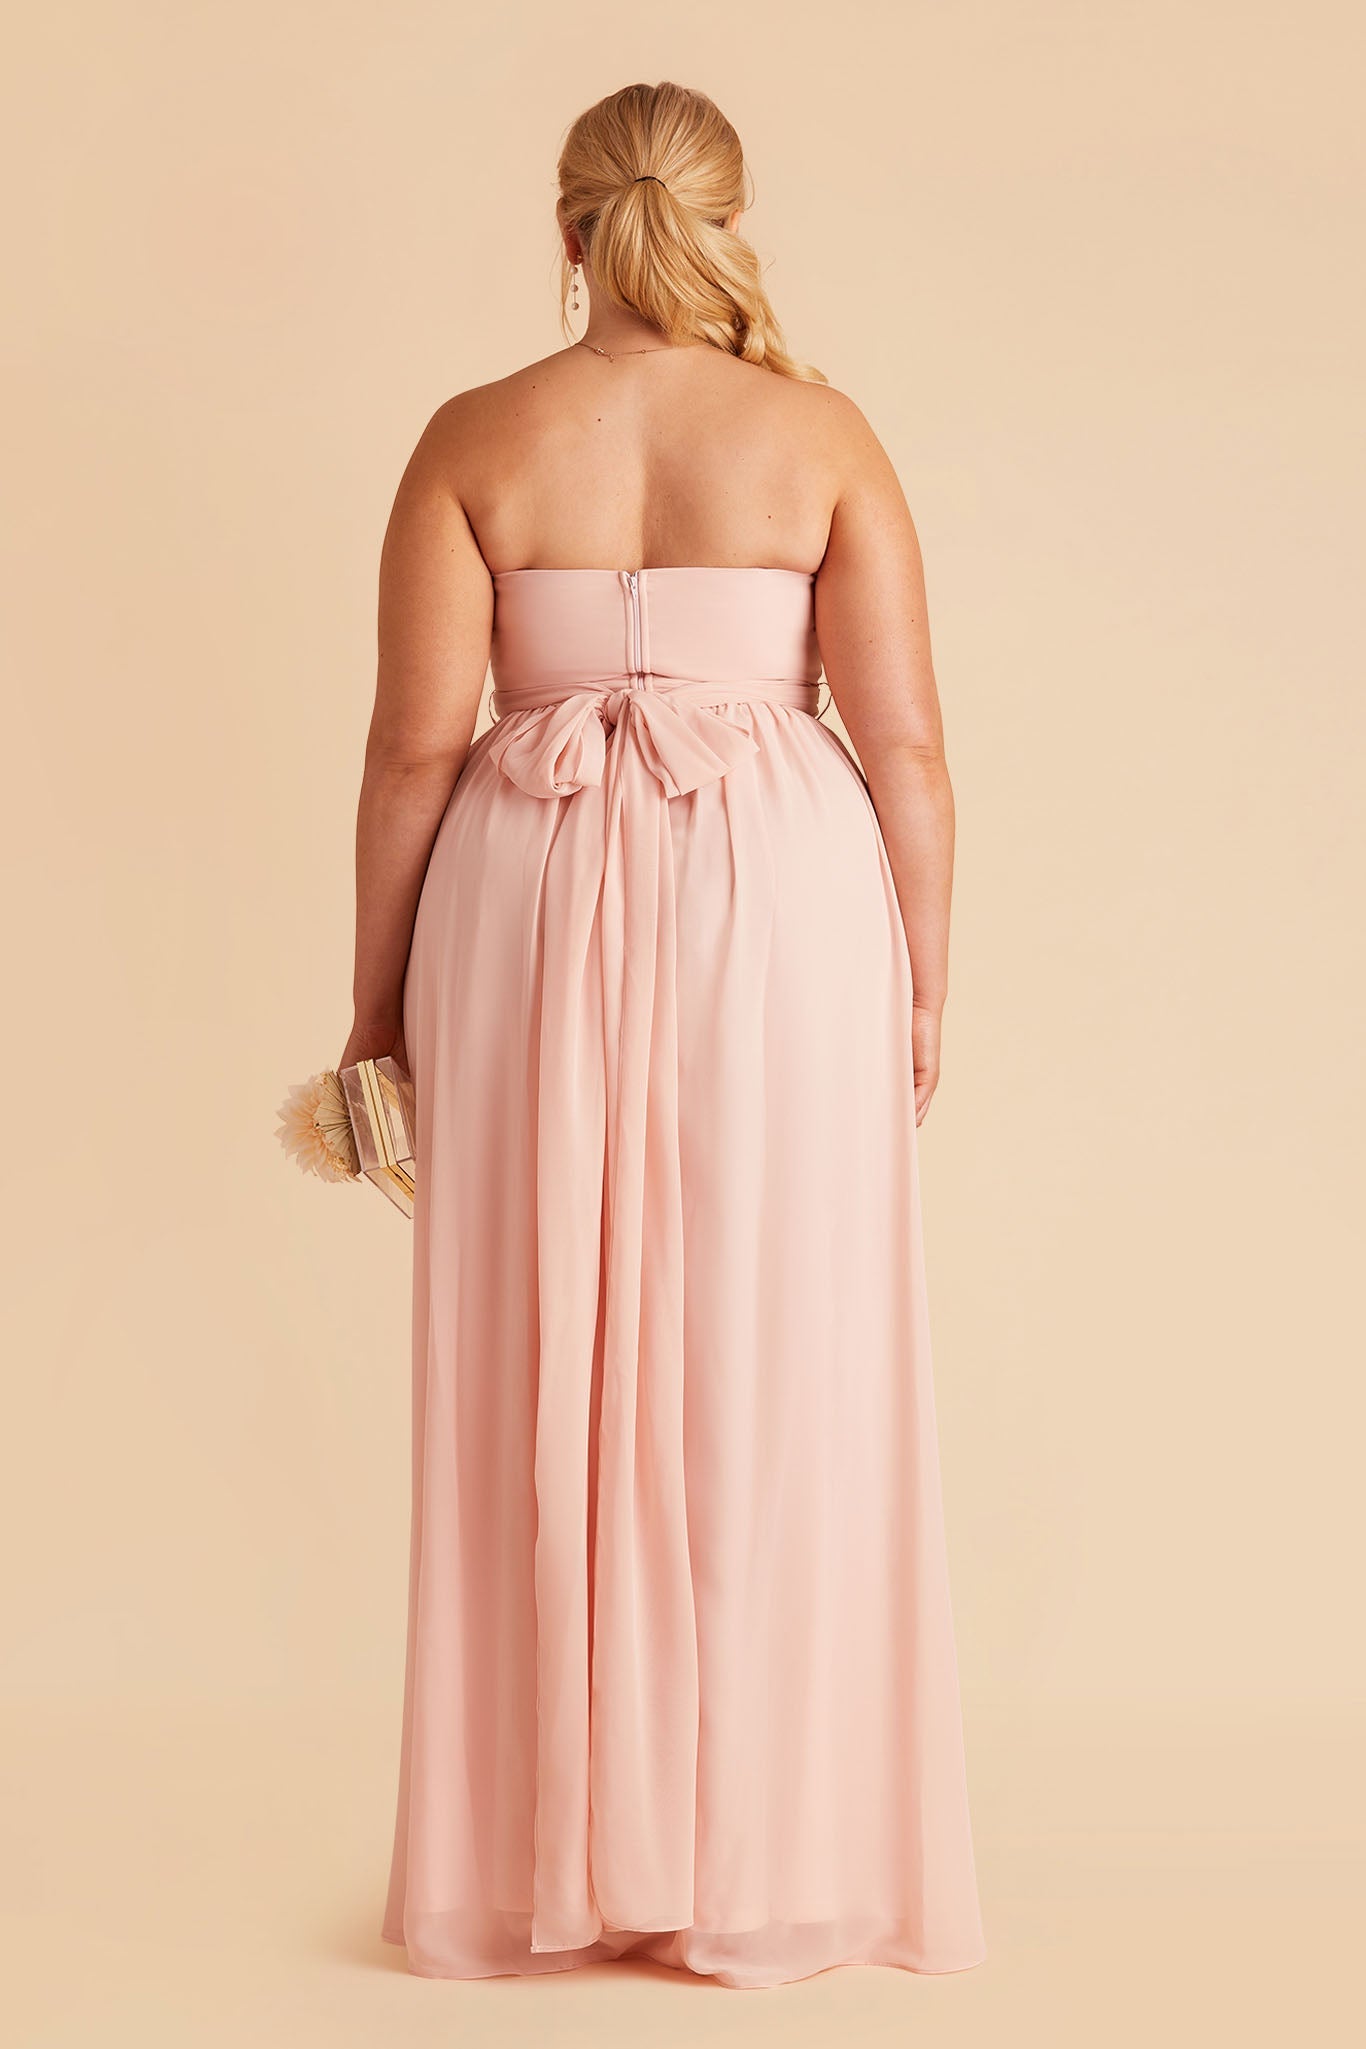 Grace plus size convertible bridesmaid dress in Blush Pink Chiffon by Birdy Grey, back view